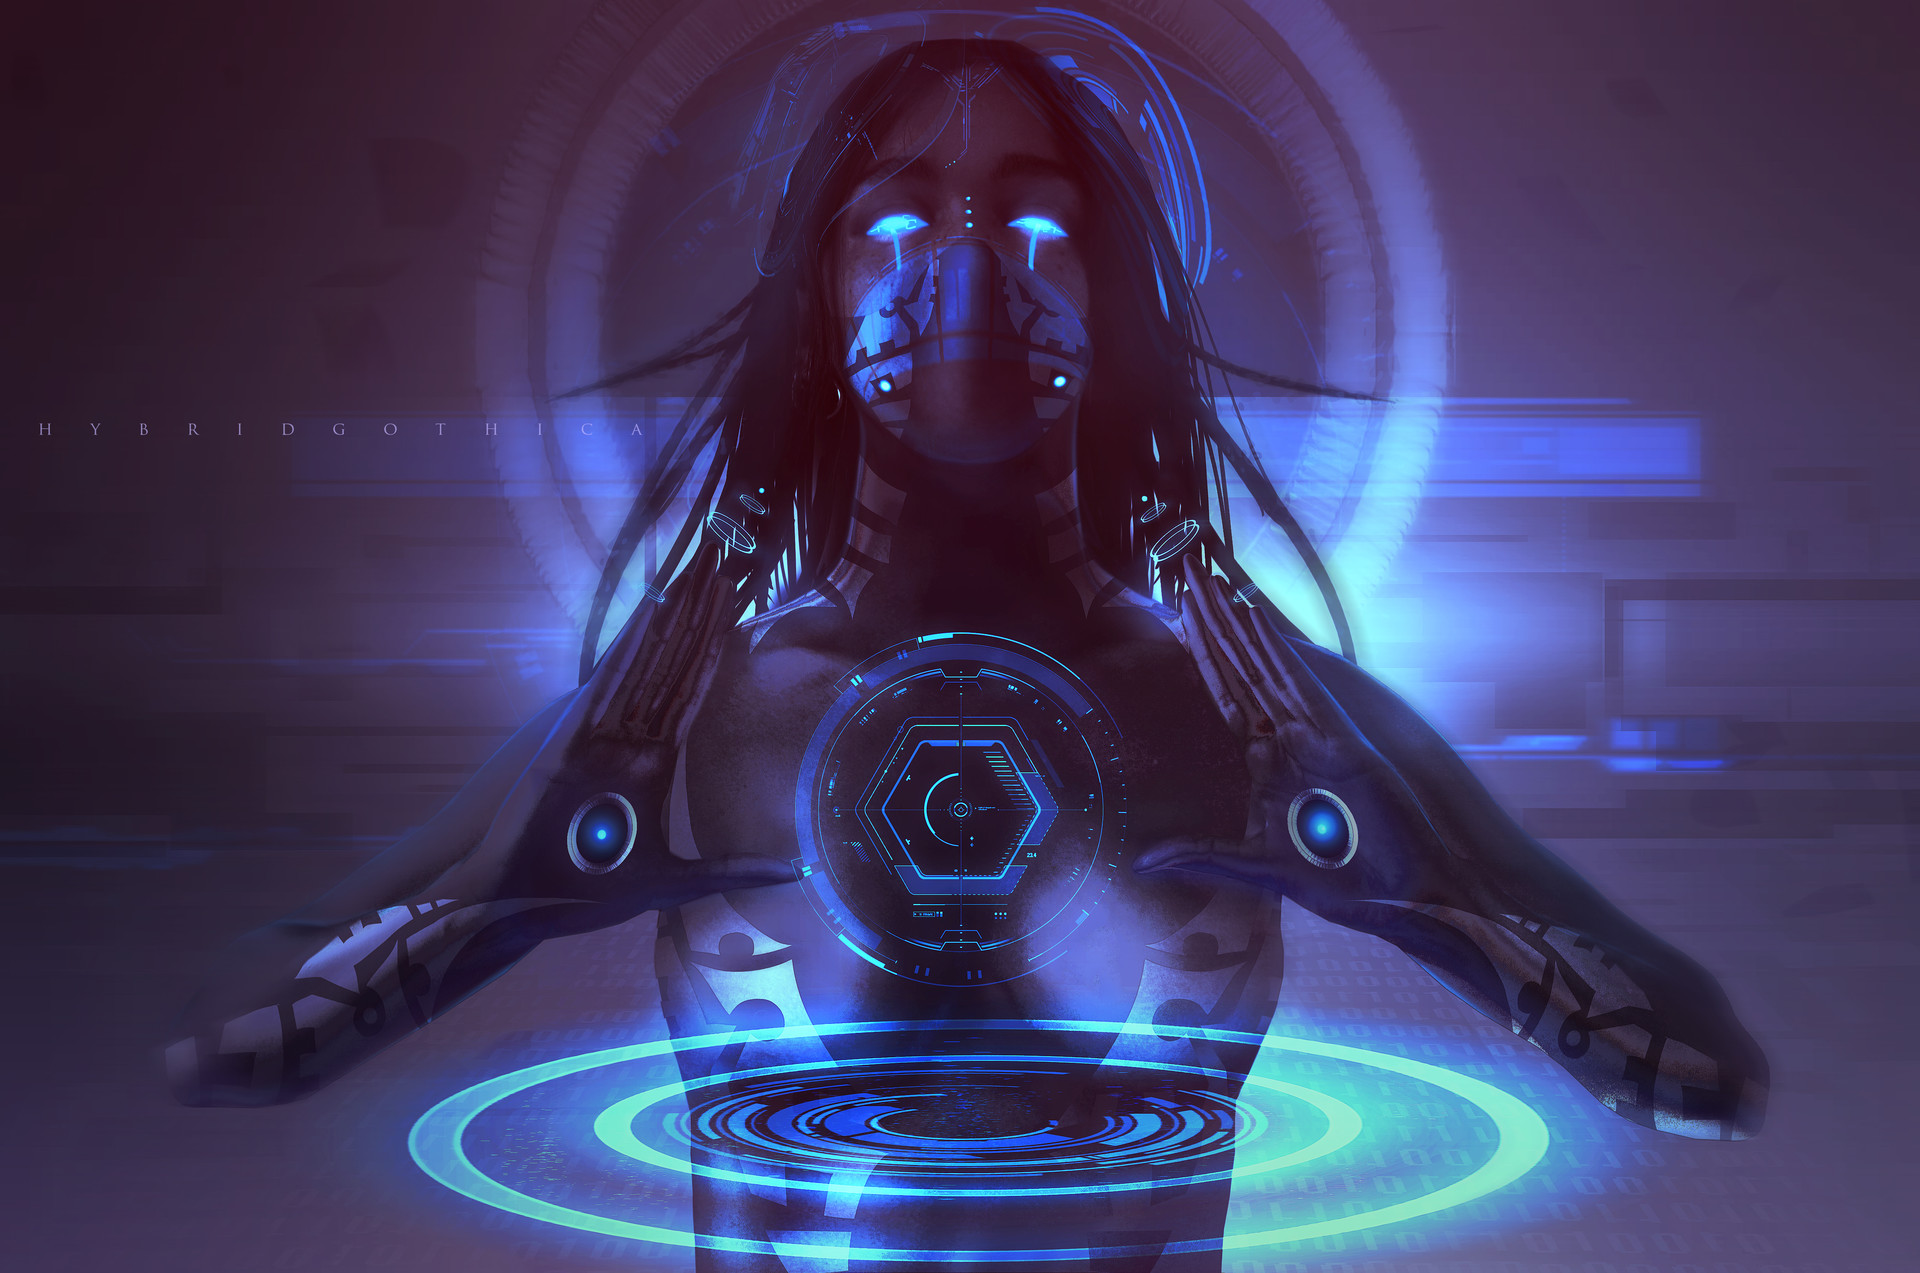 Deepseek ai. Девушка киборг Sci Fi. Киберпанк нейрофанк. Cyberpunk Sci-Fi киборги. Cyberpunk 2077 киборги арт.